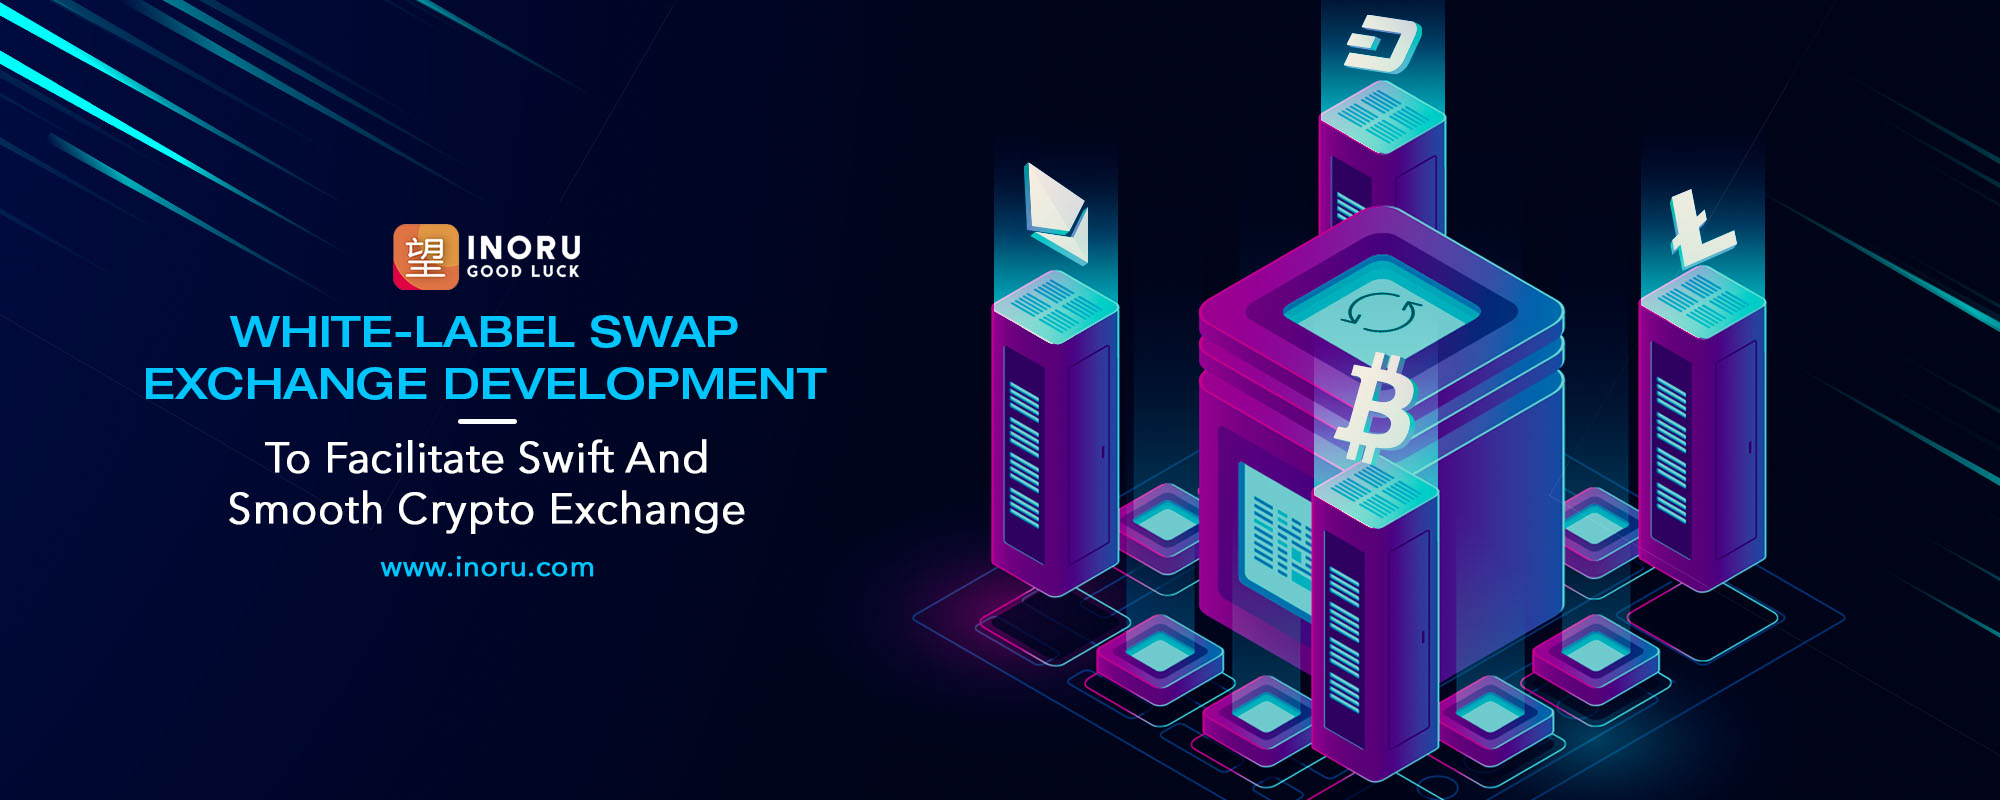 White-Label Swap Exchange Development